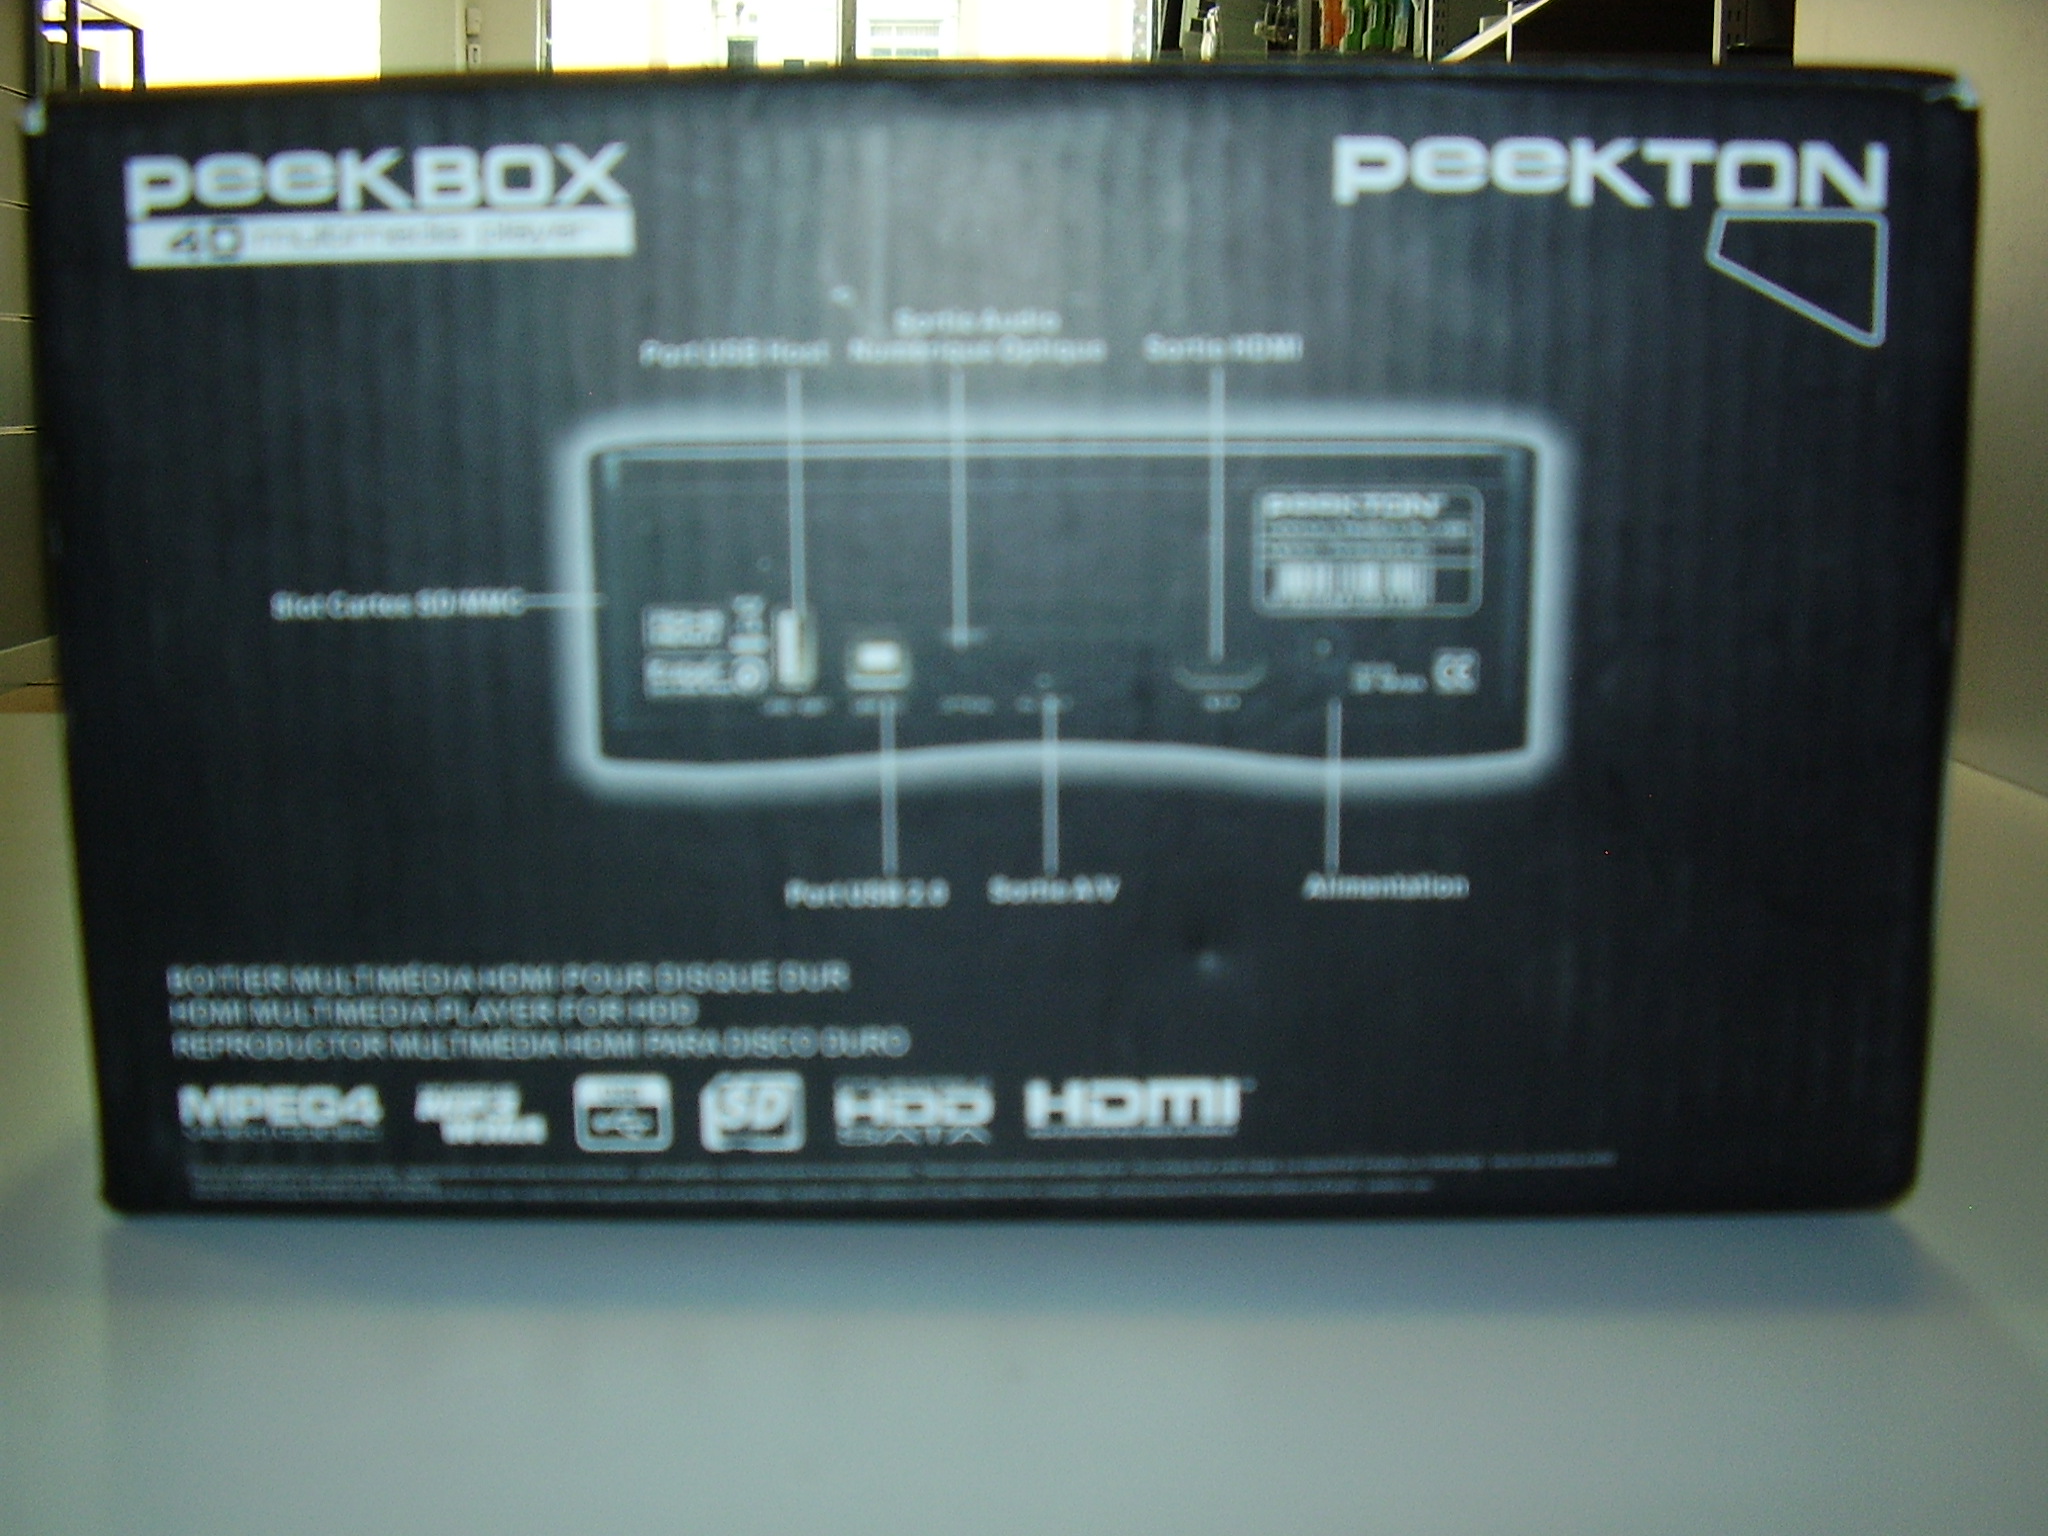 Sollozos tarta Increíble Peekton Peekbox 40 - Disco duro multimedia (HDMI, USB, tarjetas host  SD/MMC, 500 GB). - Todo Chollos Informatica